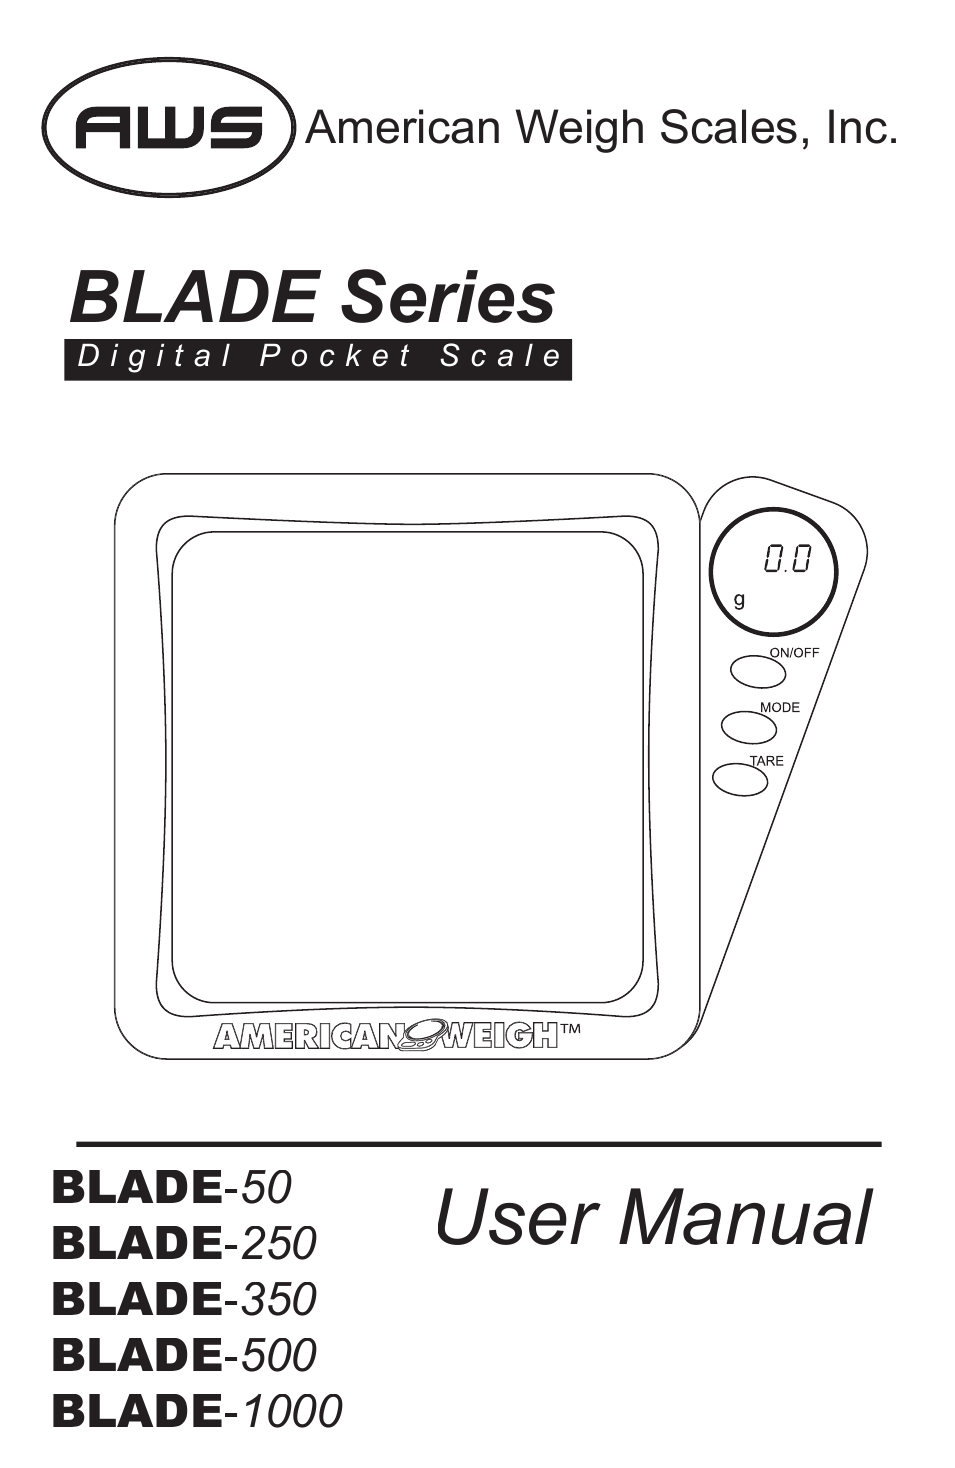 Blade-250